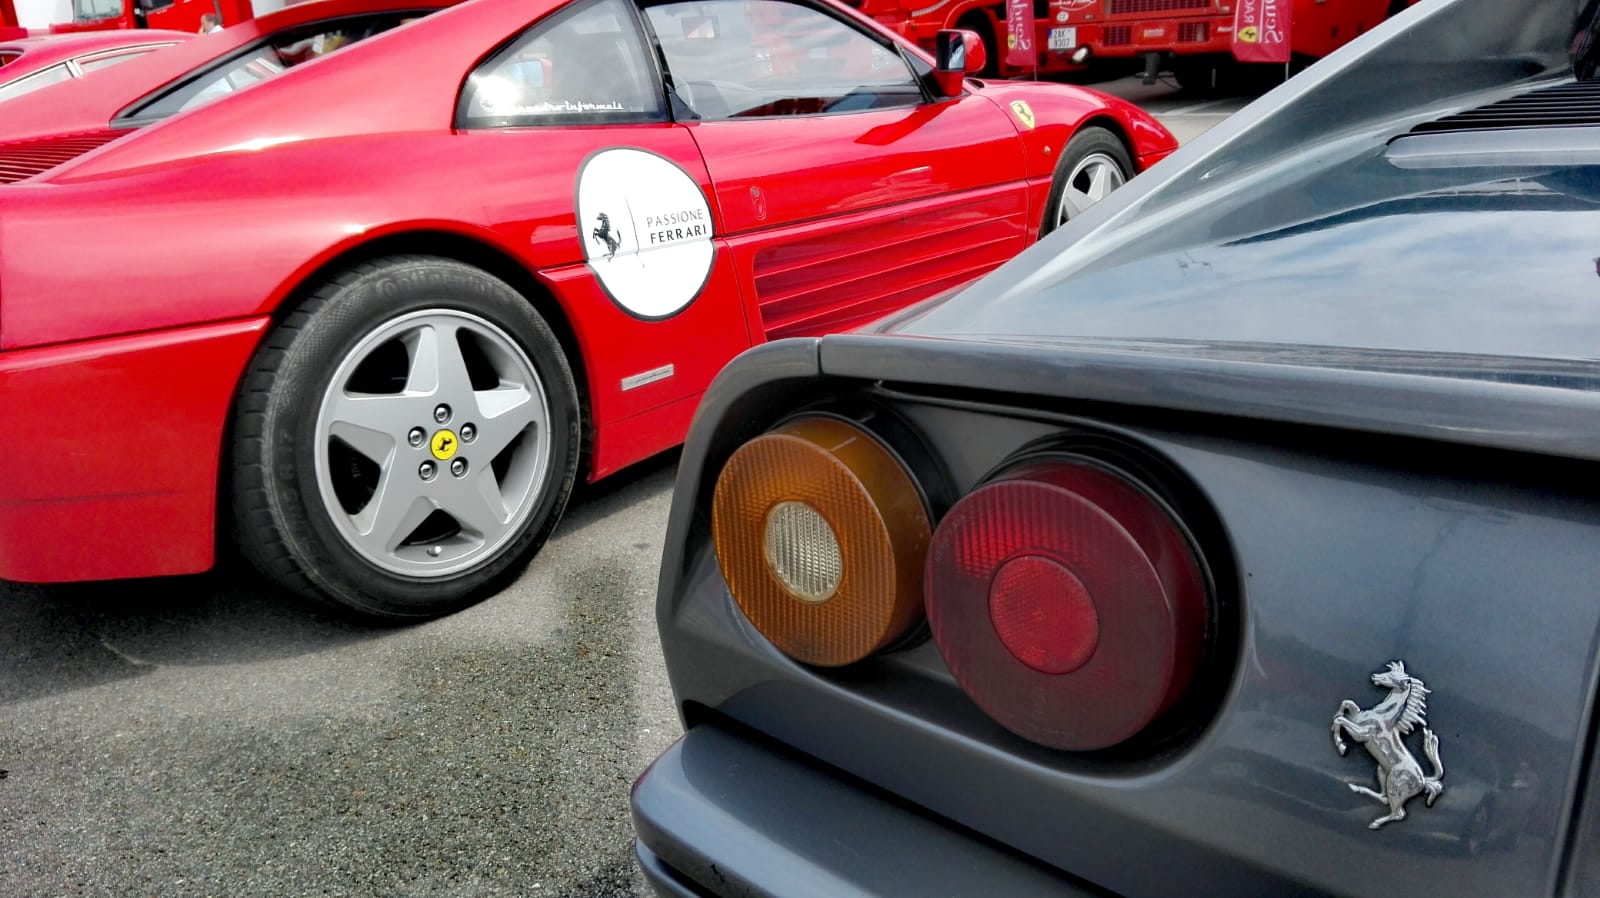 Passione Ferrari